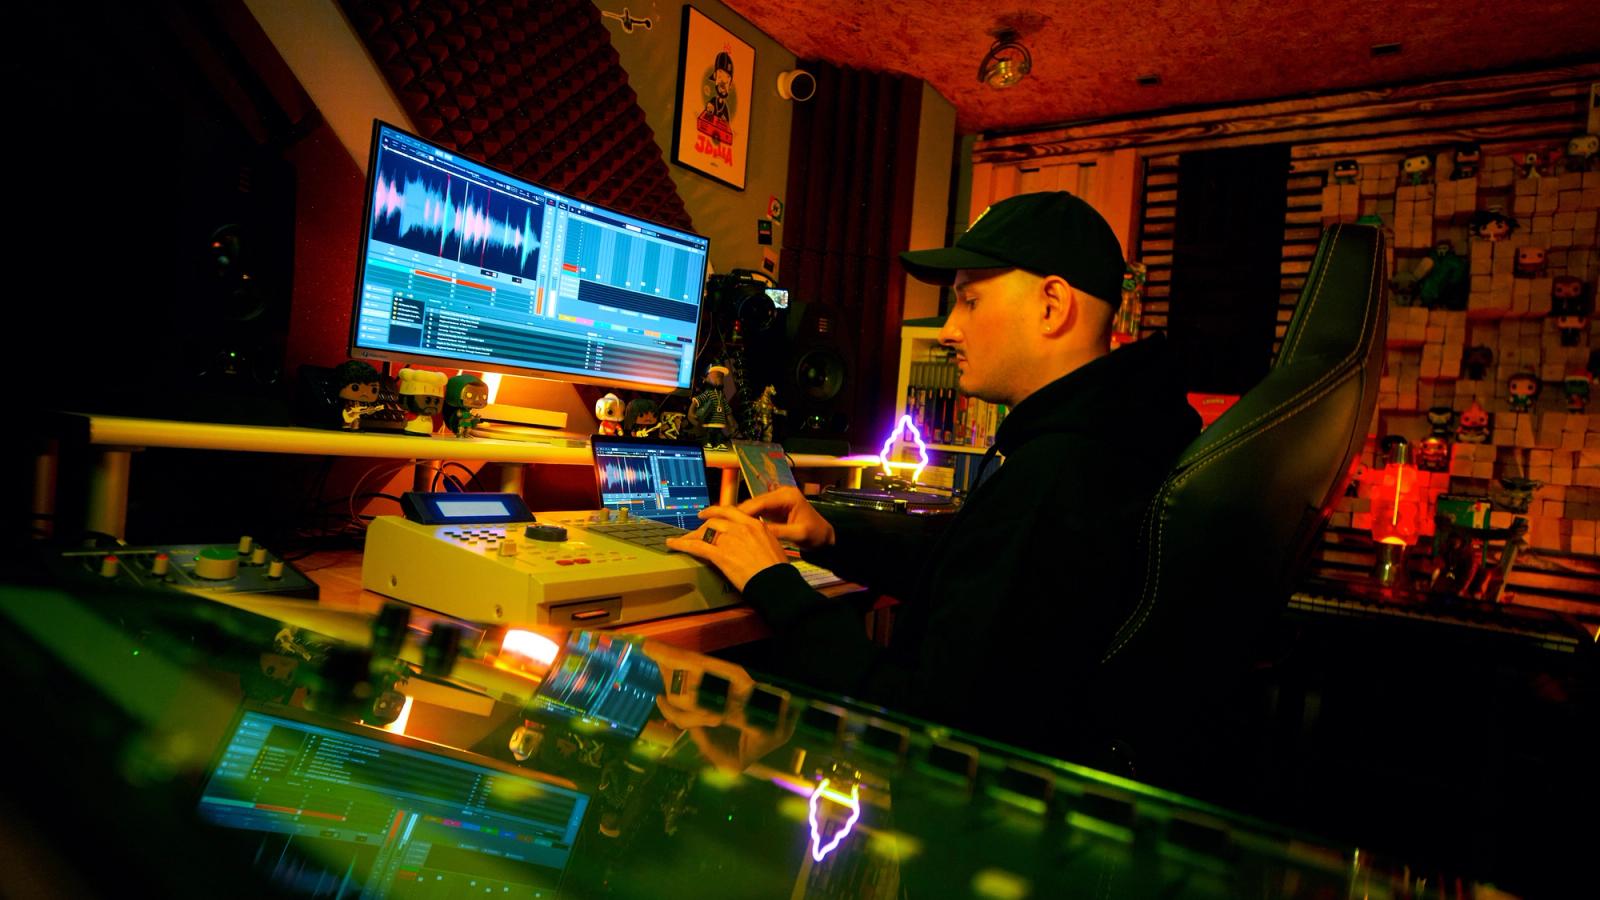 Music producer/DJ Cookin Soul using Serato Studio